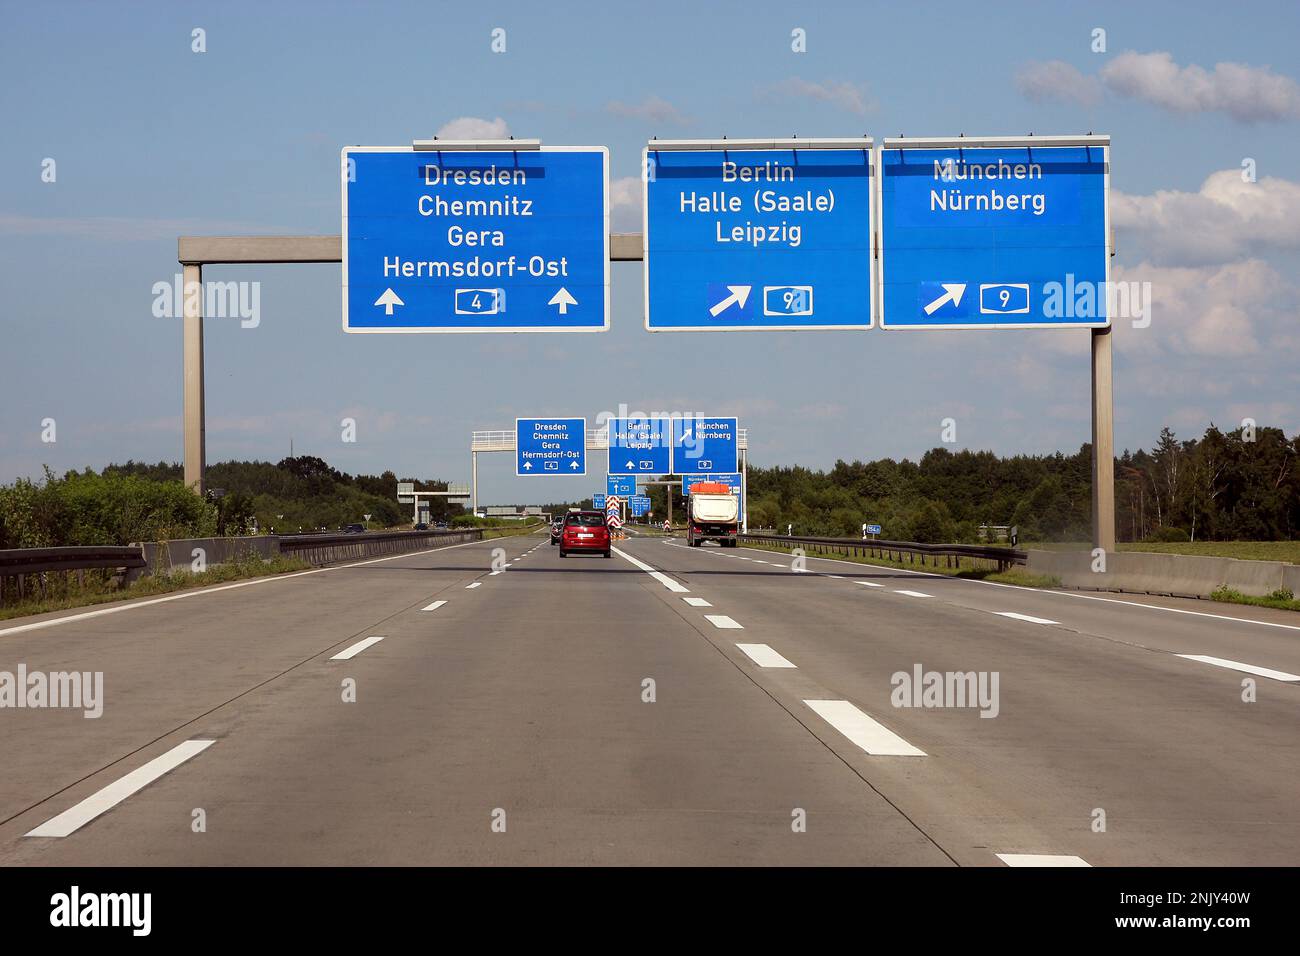 motorway signs towards Dresden, Chemnitz, Gera, Hermsdorf and Berlin, Halle, Saale and Munich, Nuremberg, Germany, Bavaria, Muenchen Stock Photo